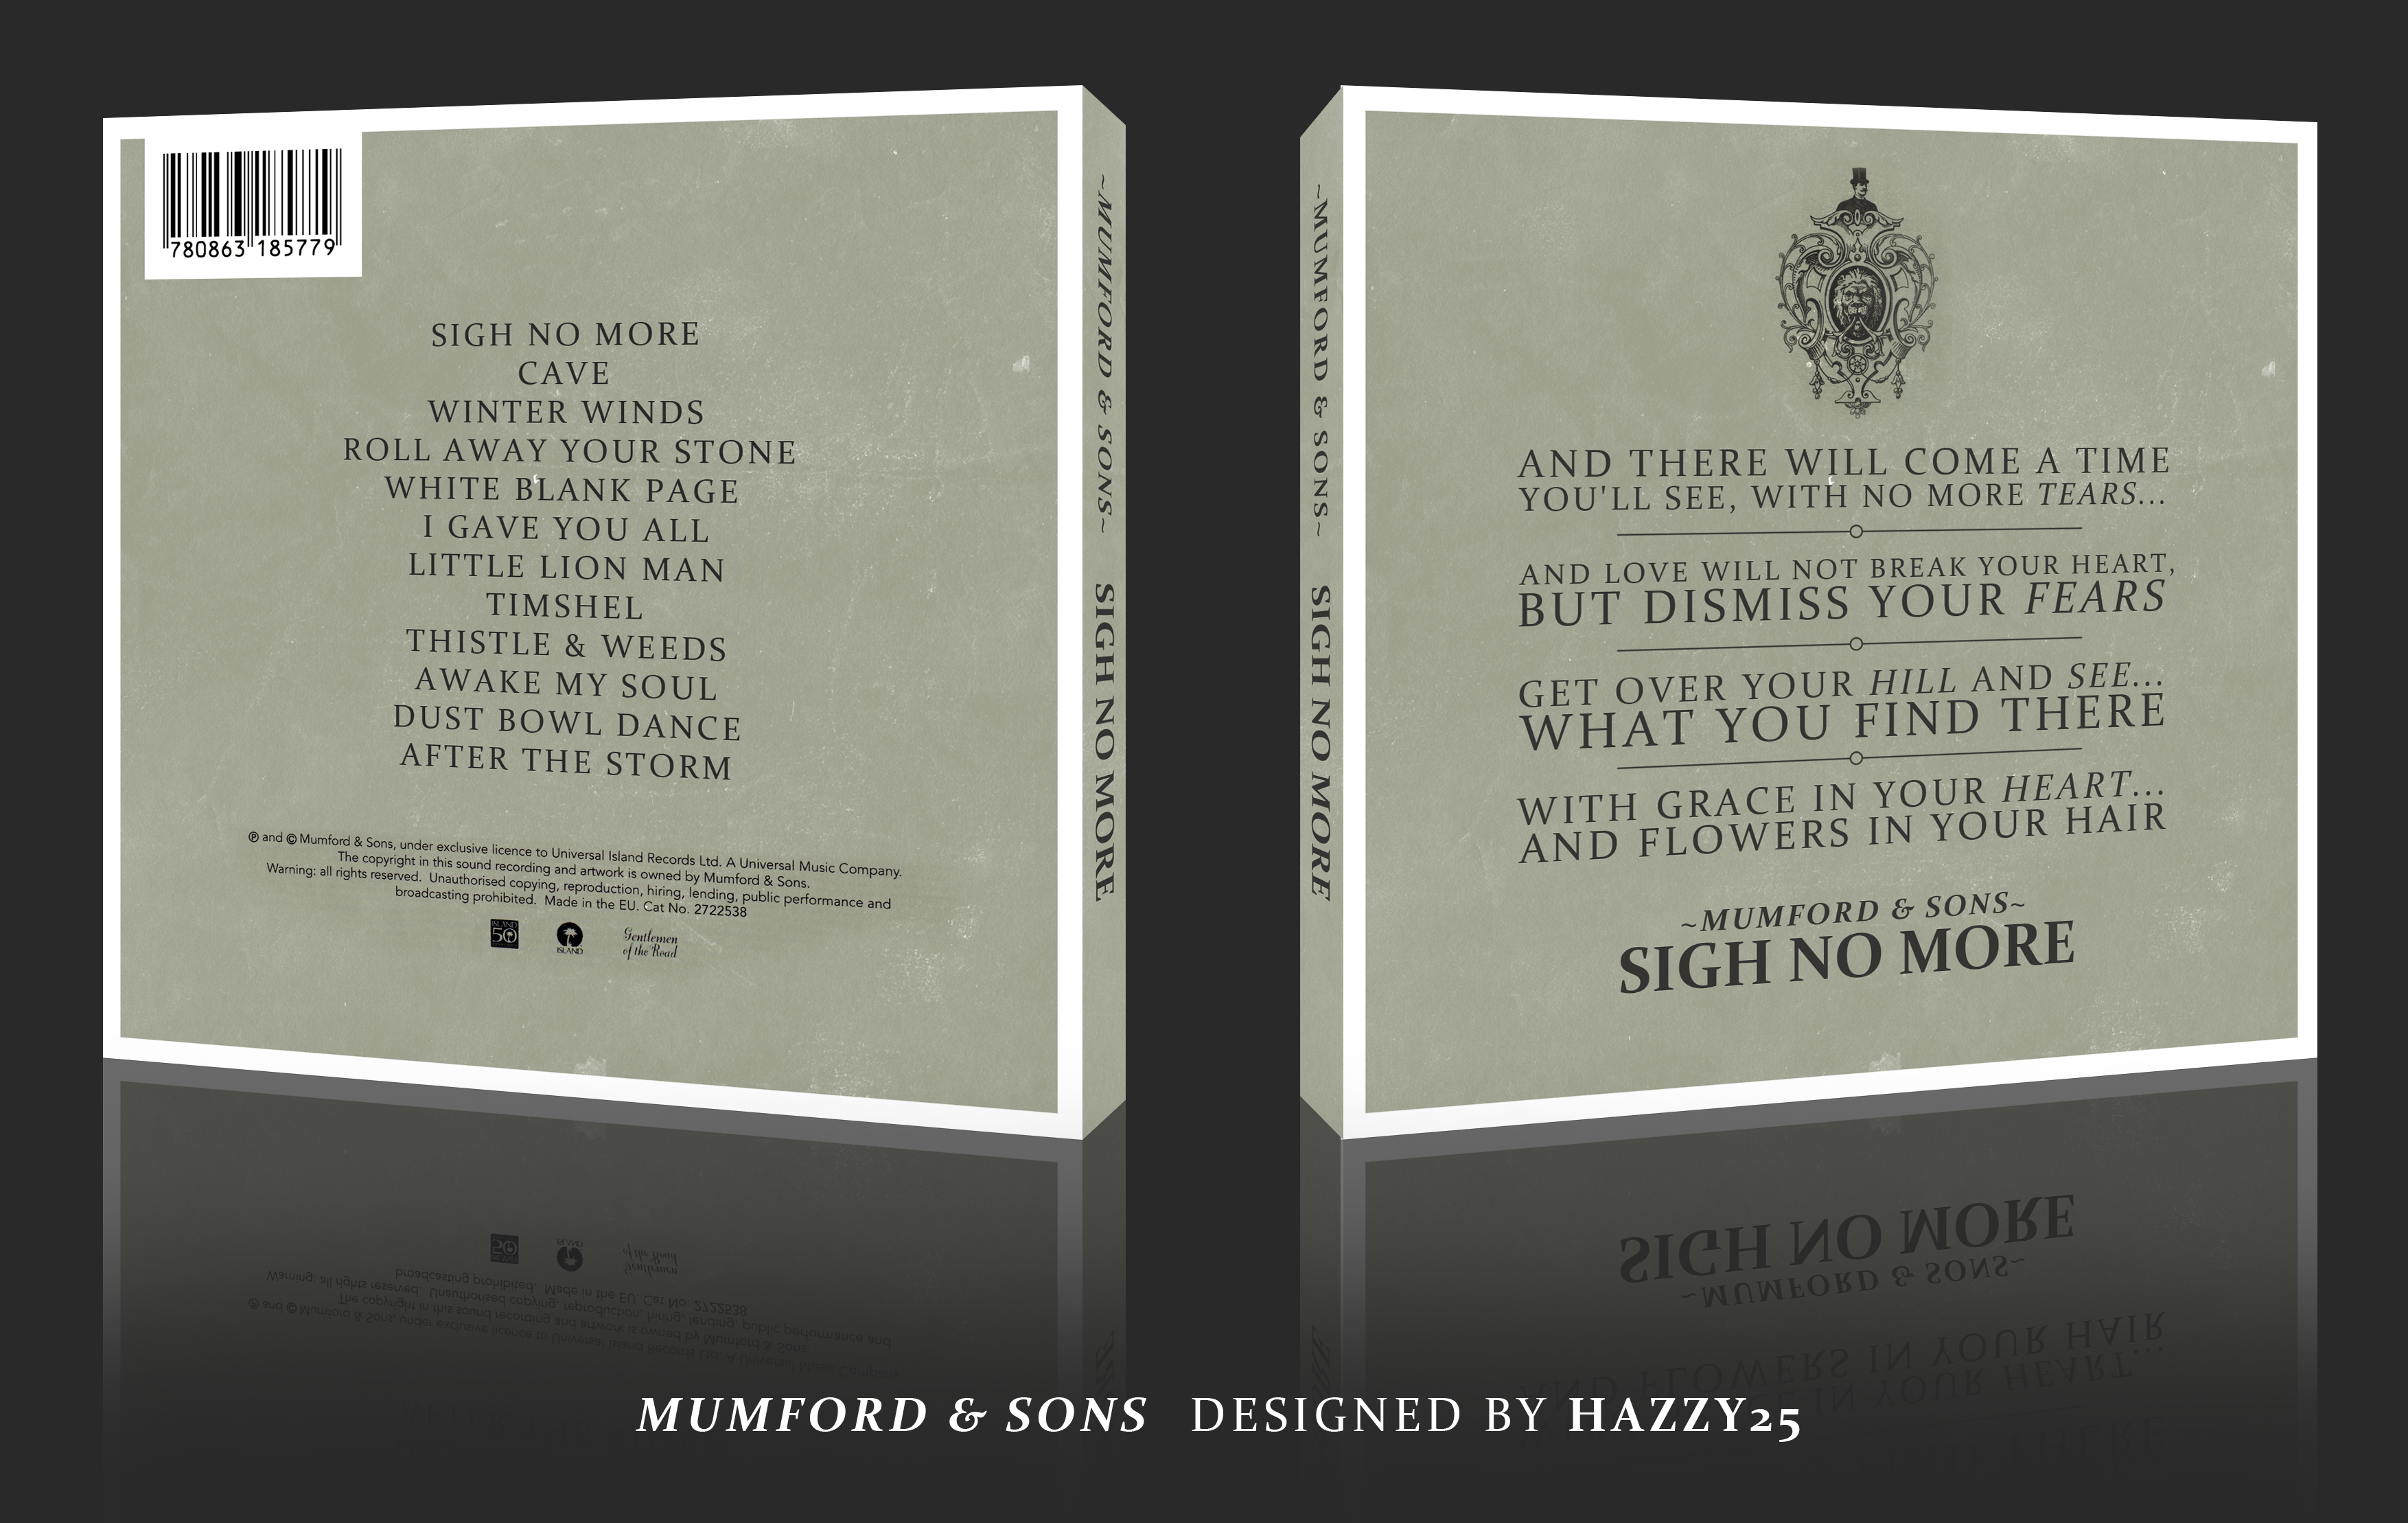 Mumford & Sons: Sigh No More box cover